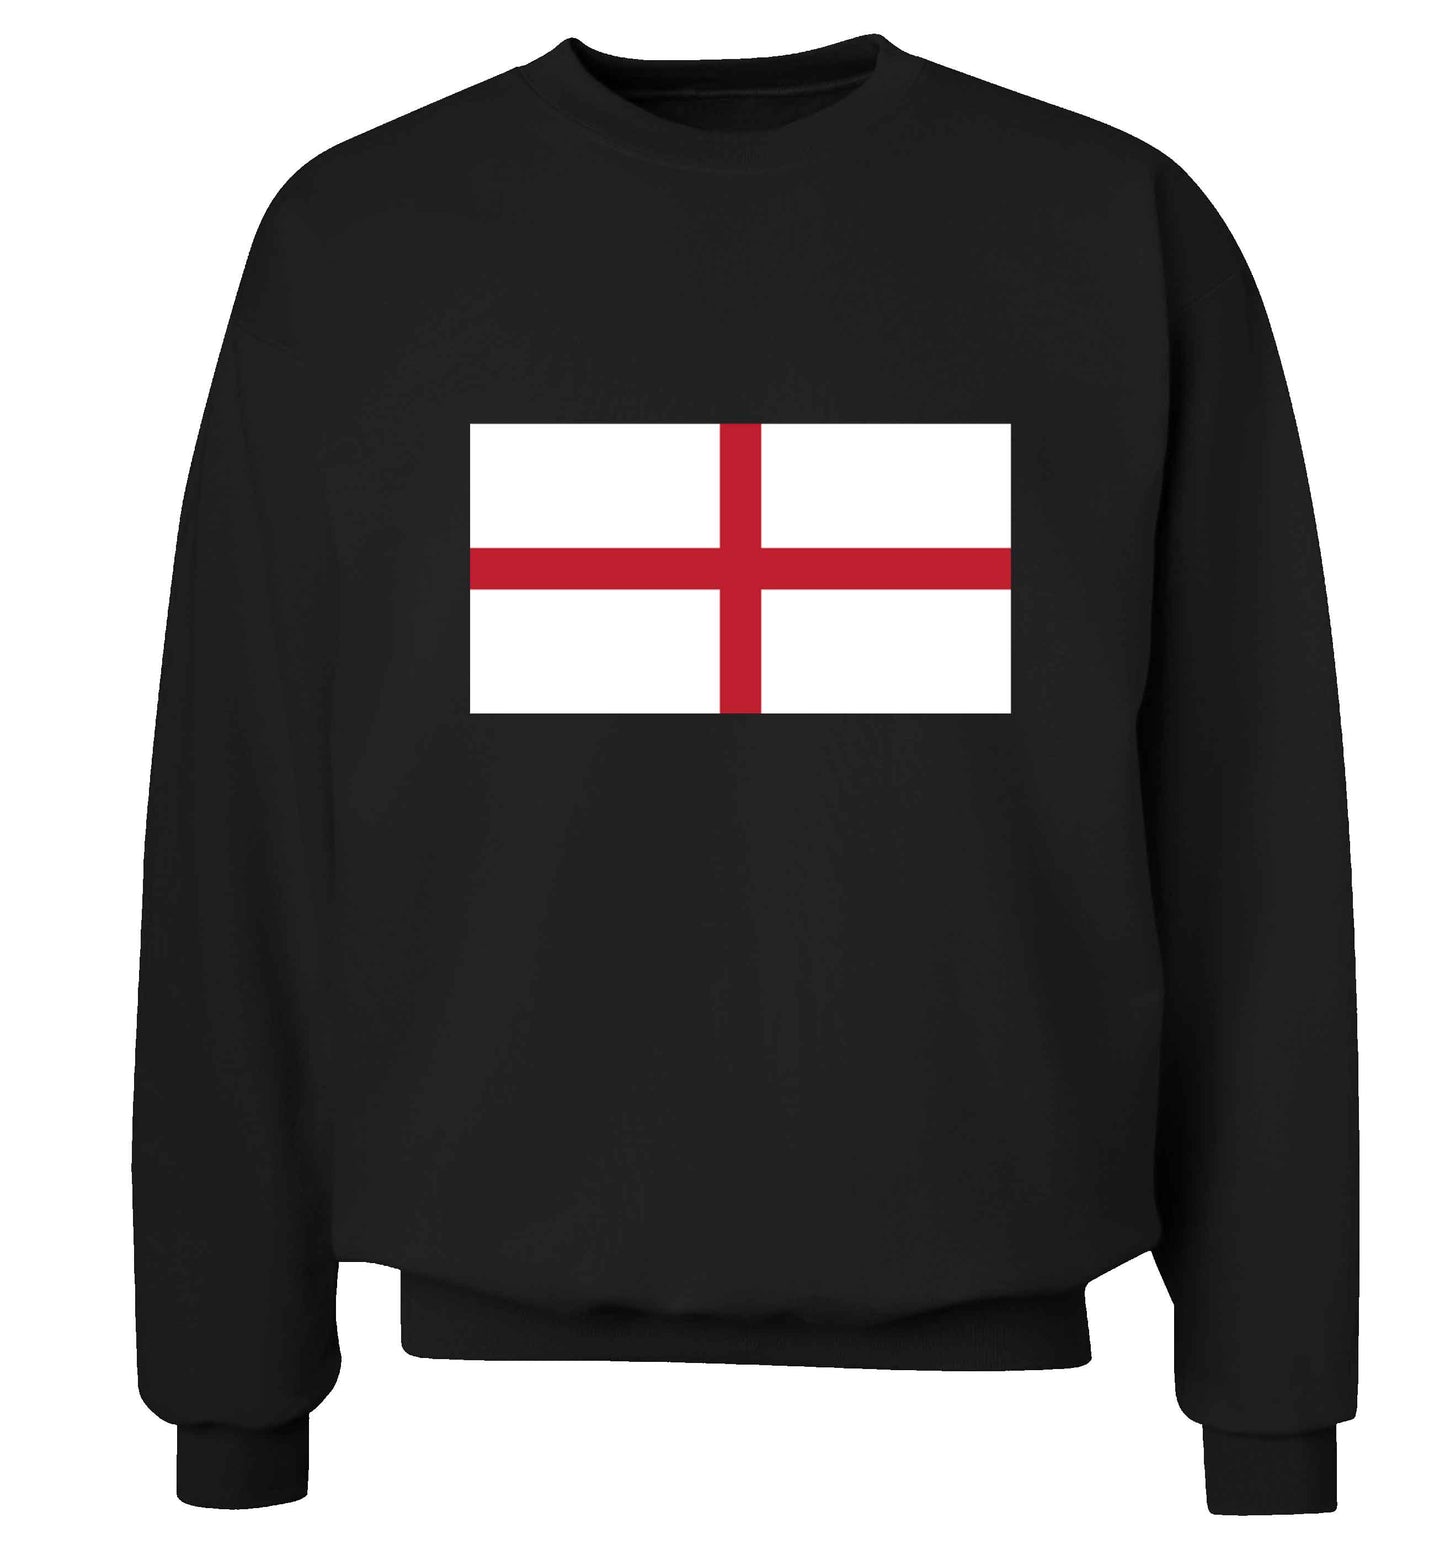 England Flag adult's unisex black sweater 2XL